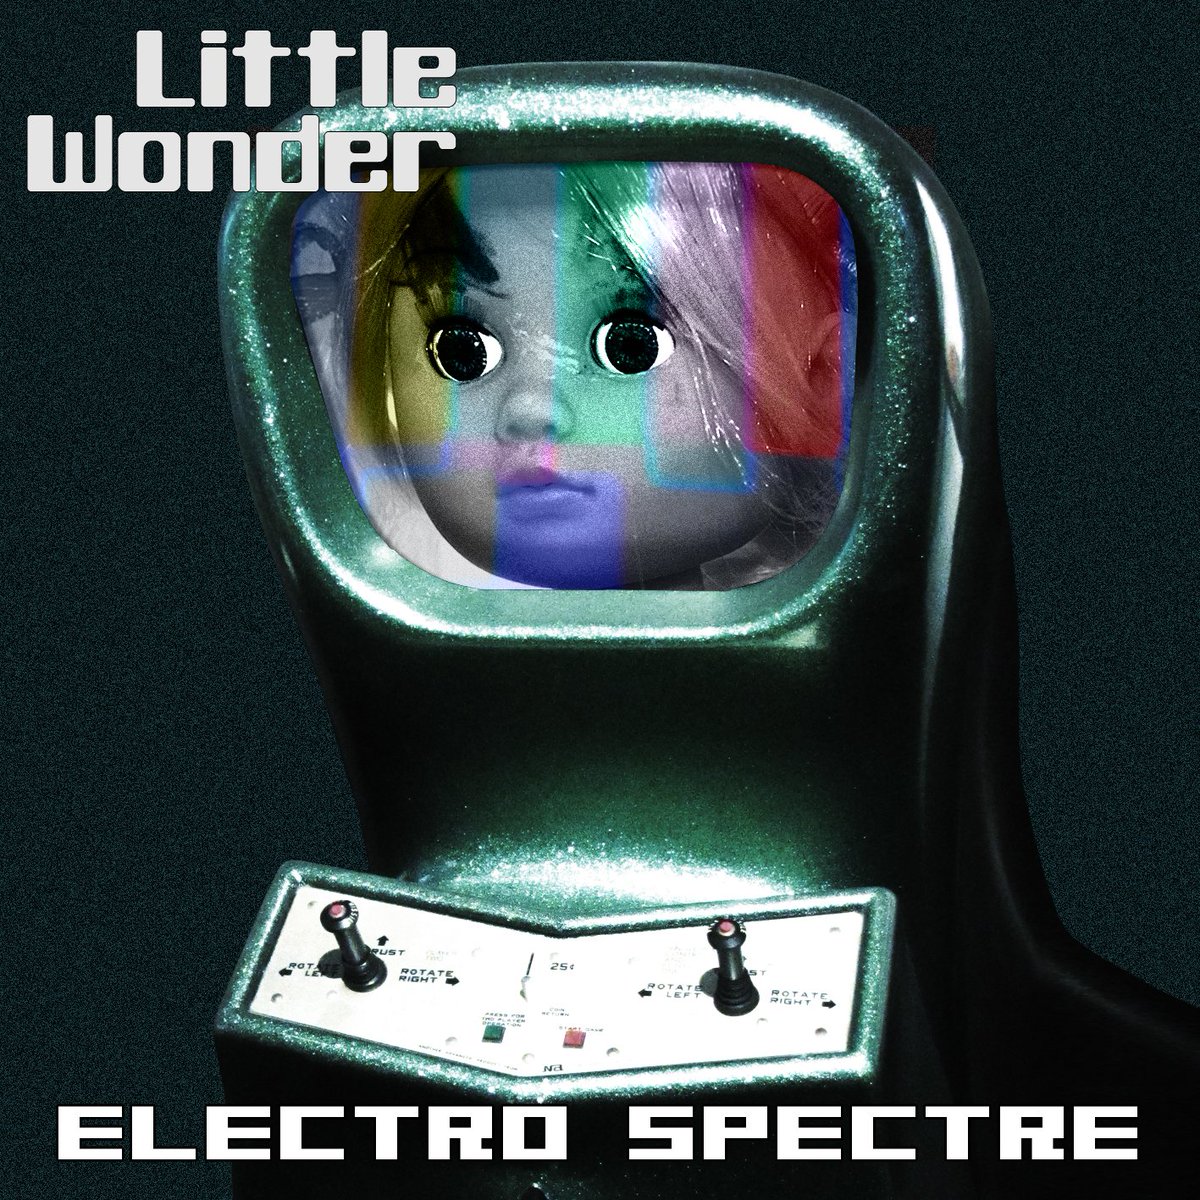 Buy 'Little Wonder' REMIXES here: electrospectre.bandcamp.com/album/little-w…